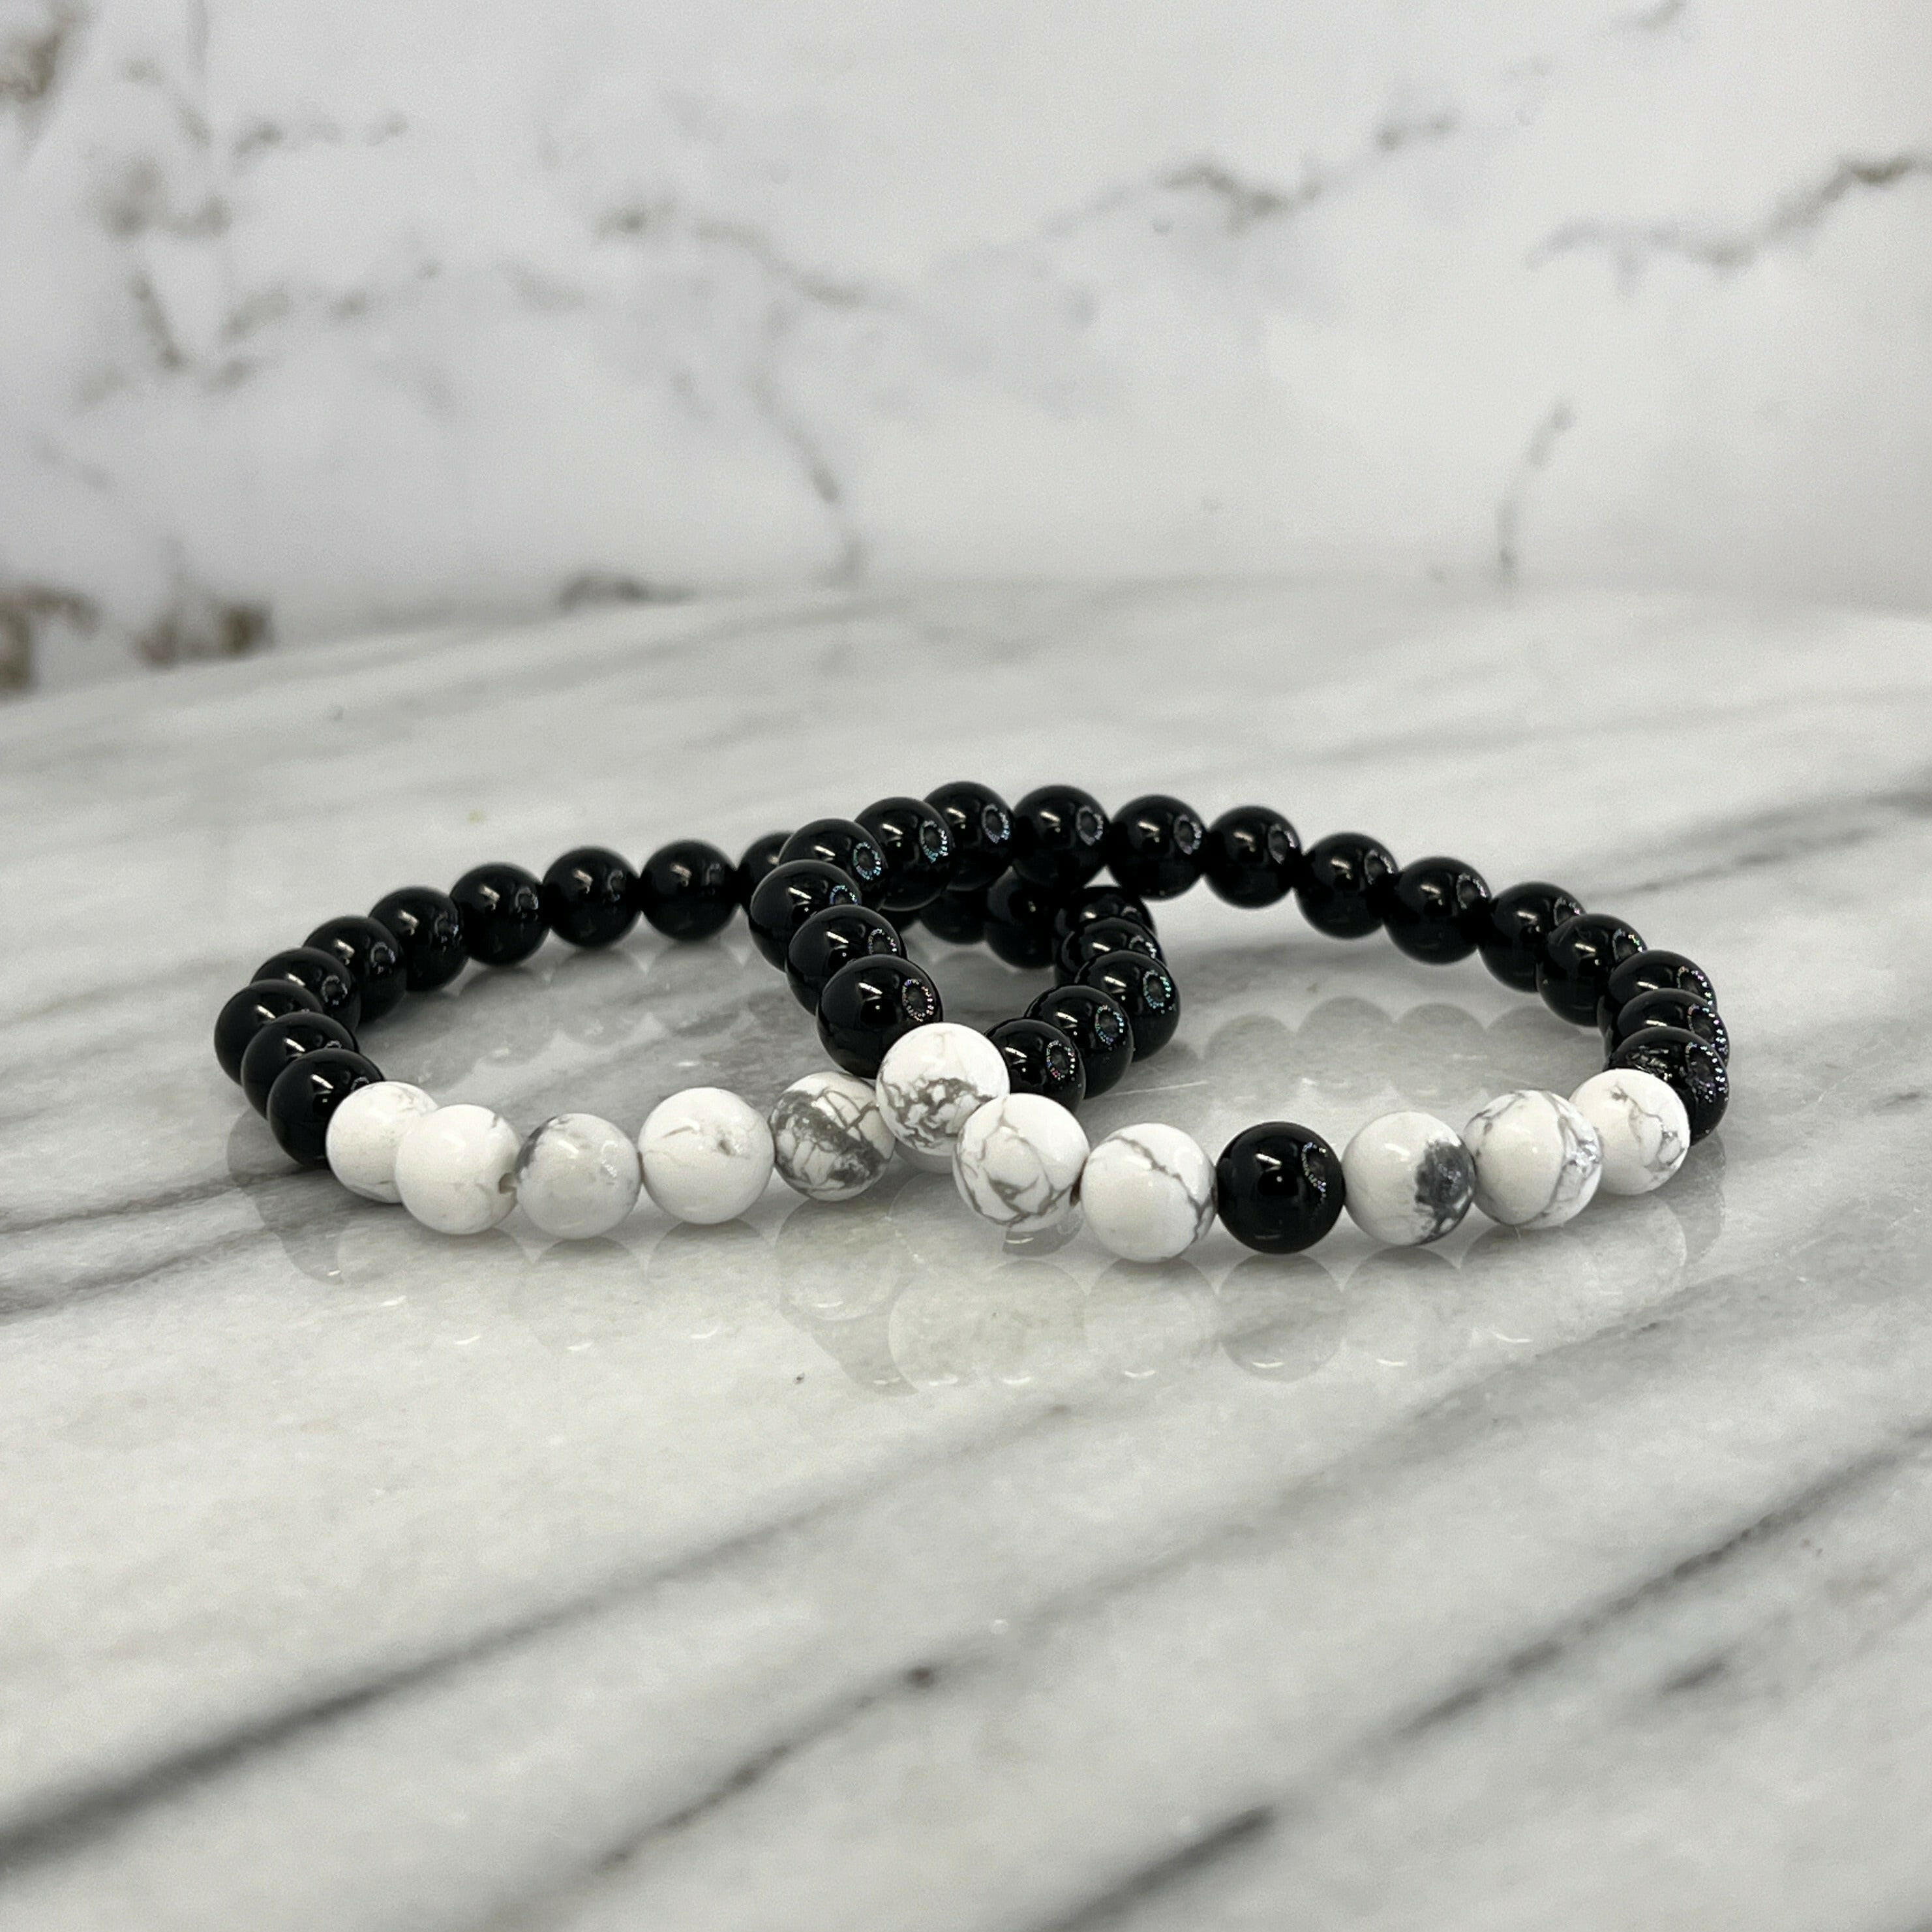 Black Onyx and Howlite gemstones for elegant jewelry designs